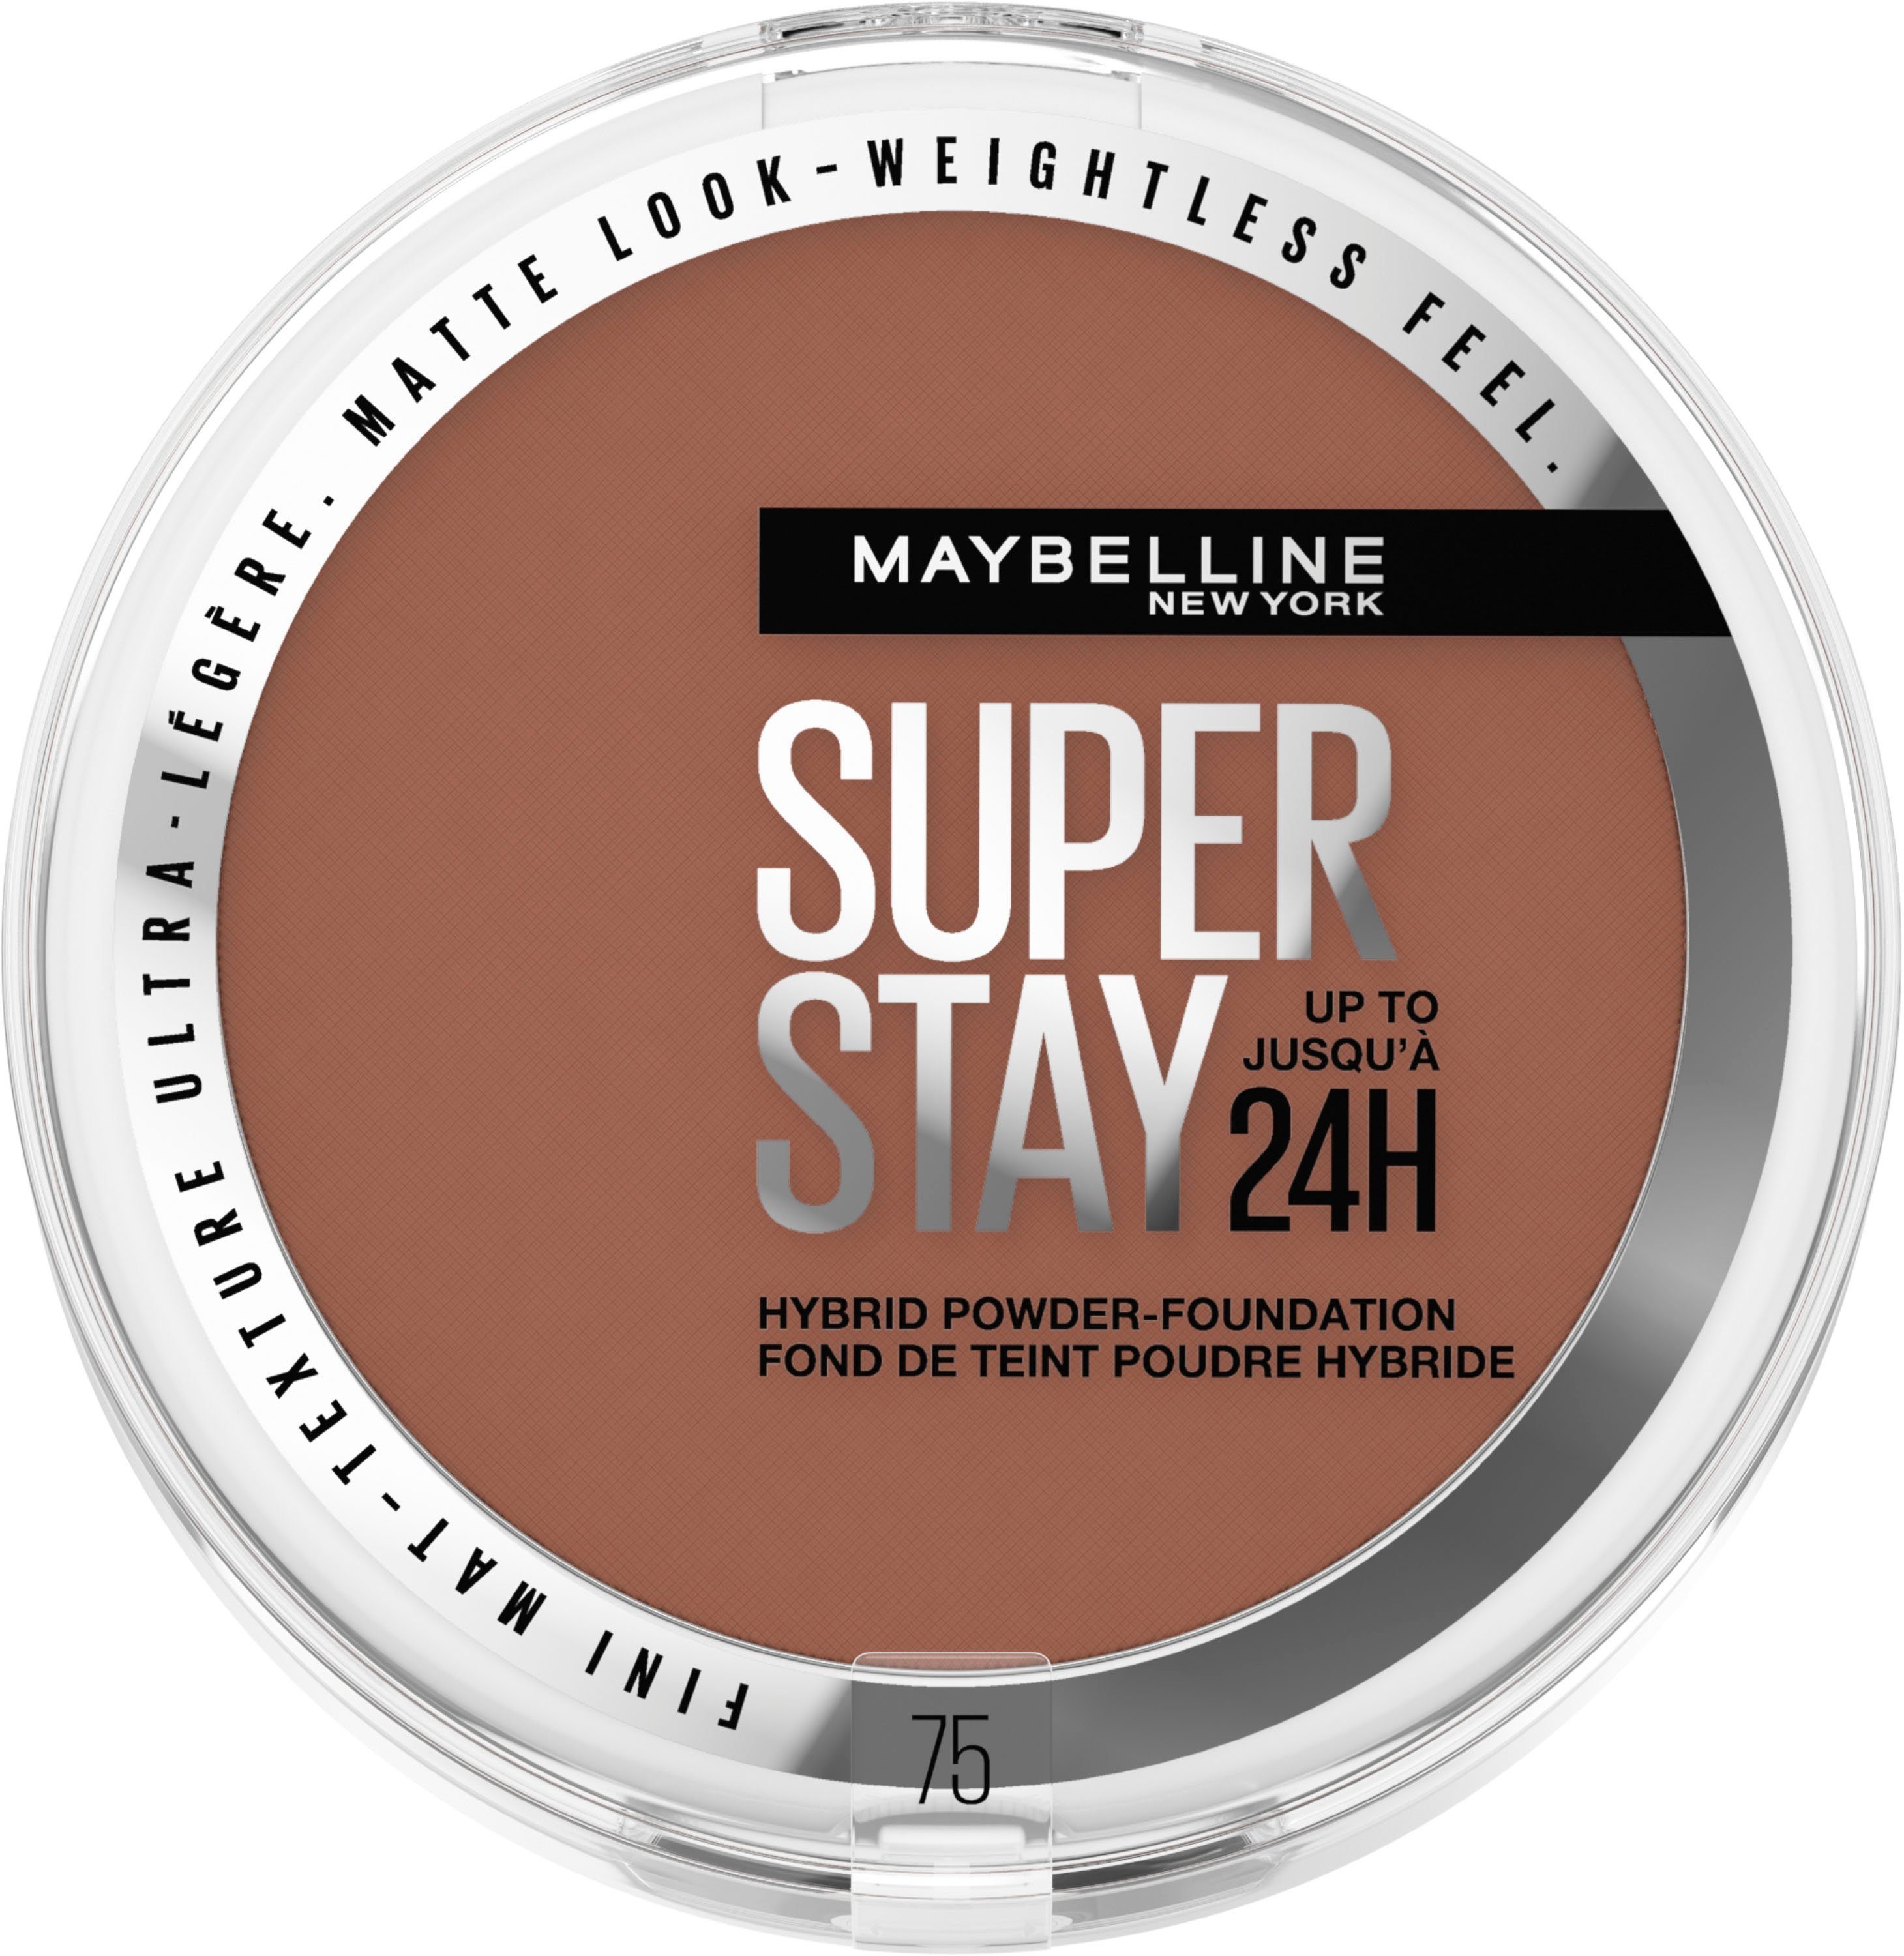 MAYBELLINE NEW YORK Foundation Hybrides Super New York Stay Maybelline Make-Up Puder